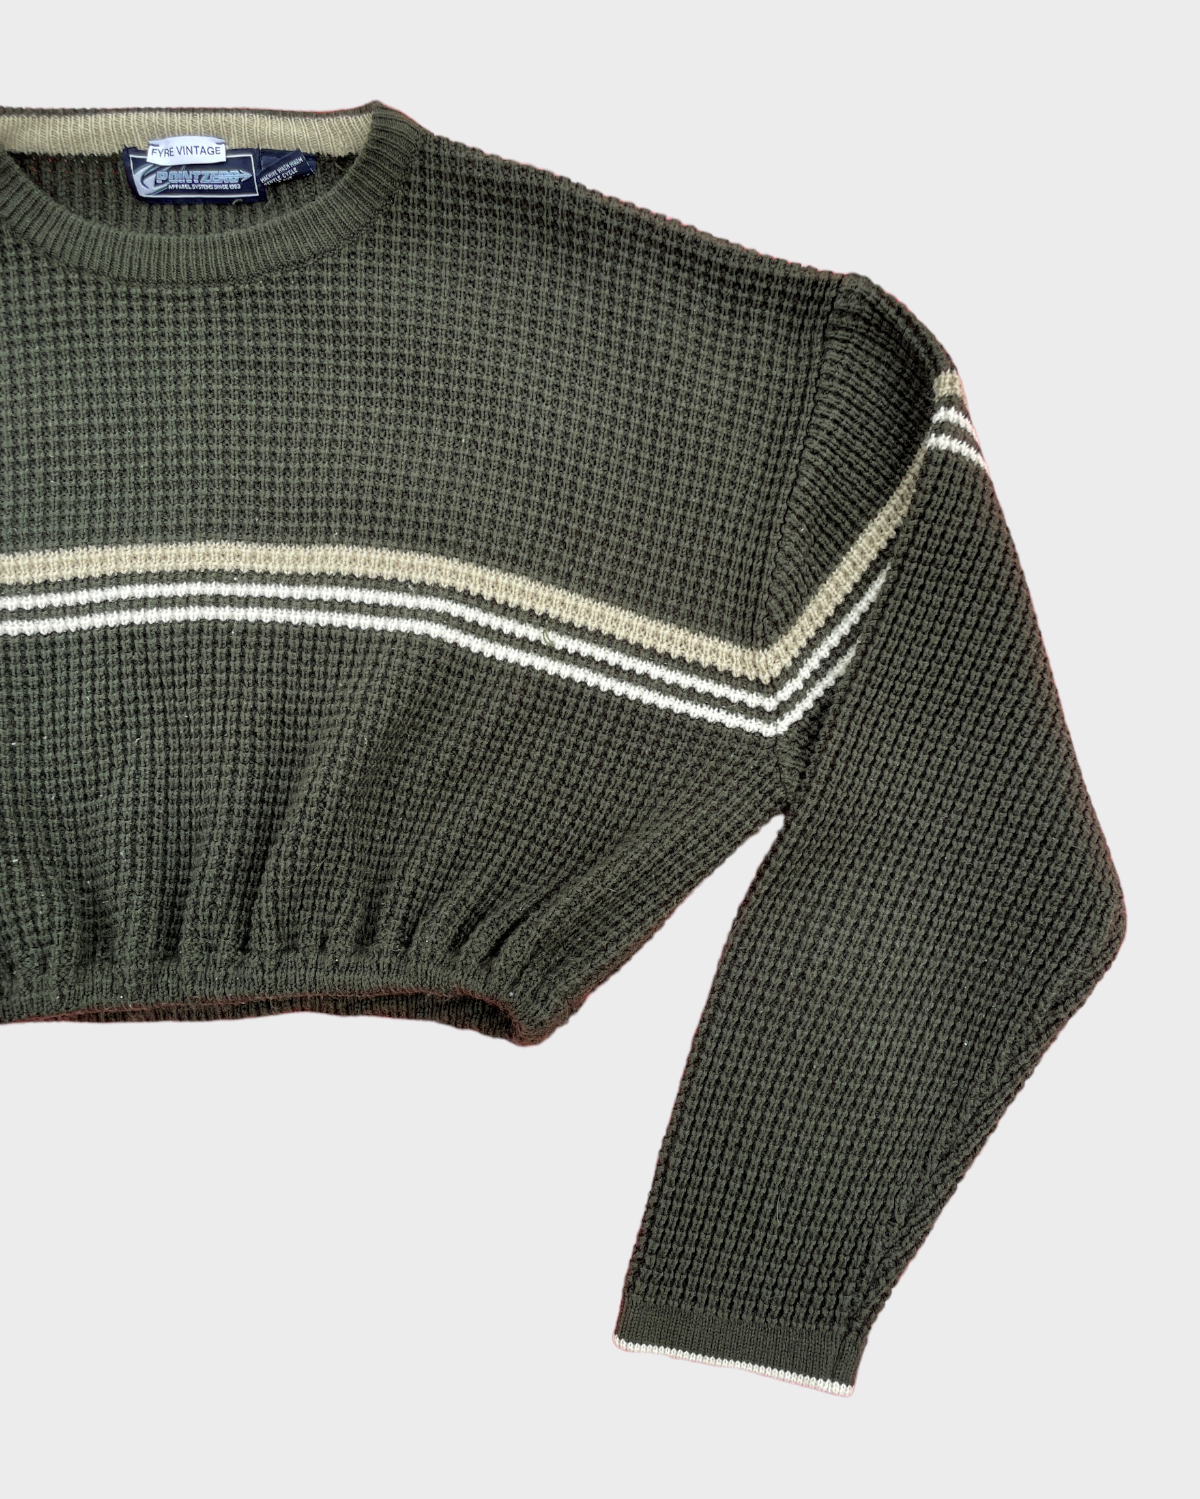 Vintage Rework Green Crop Grandpa Sweater (M-XL)